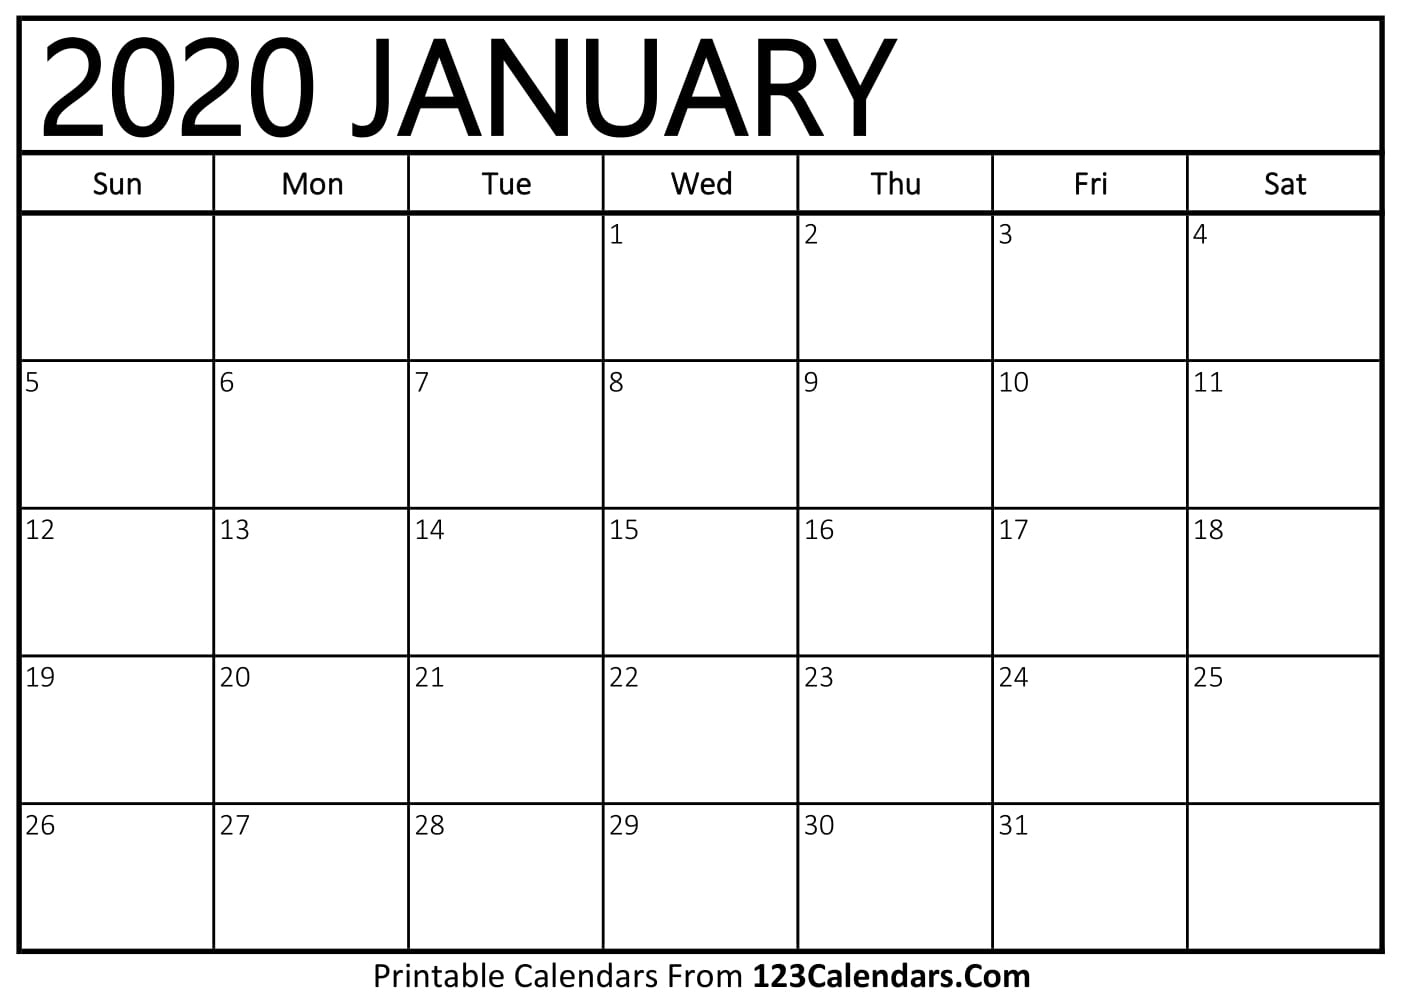 Free Printable Calendar | 123Calendars Remarkable Free Printable Calendar Templates 2020